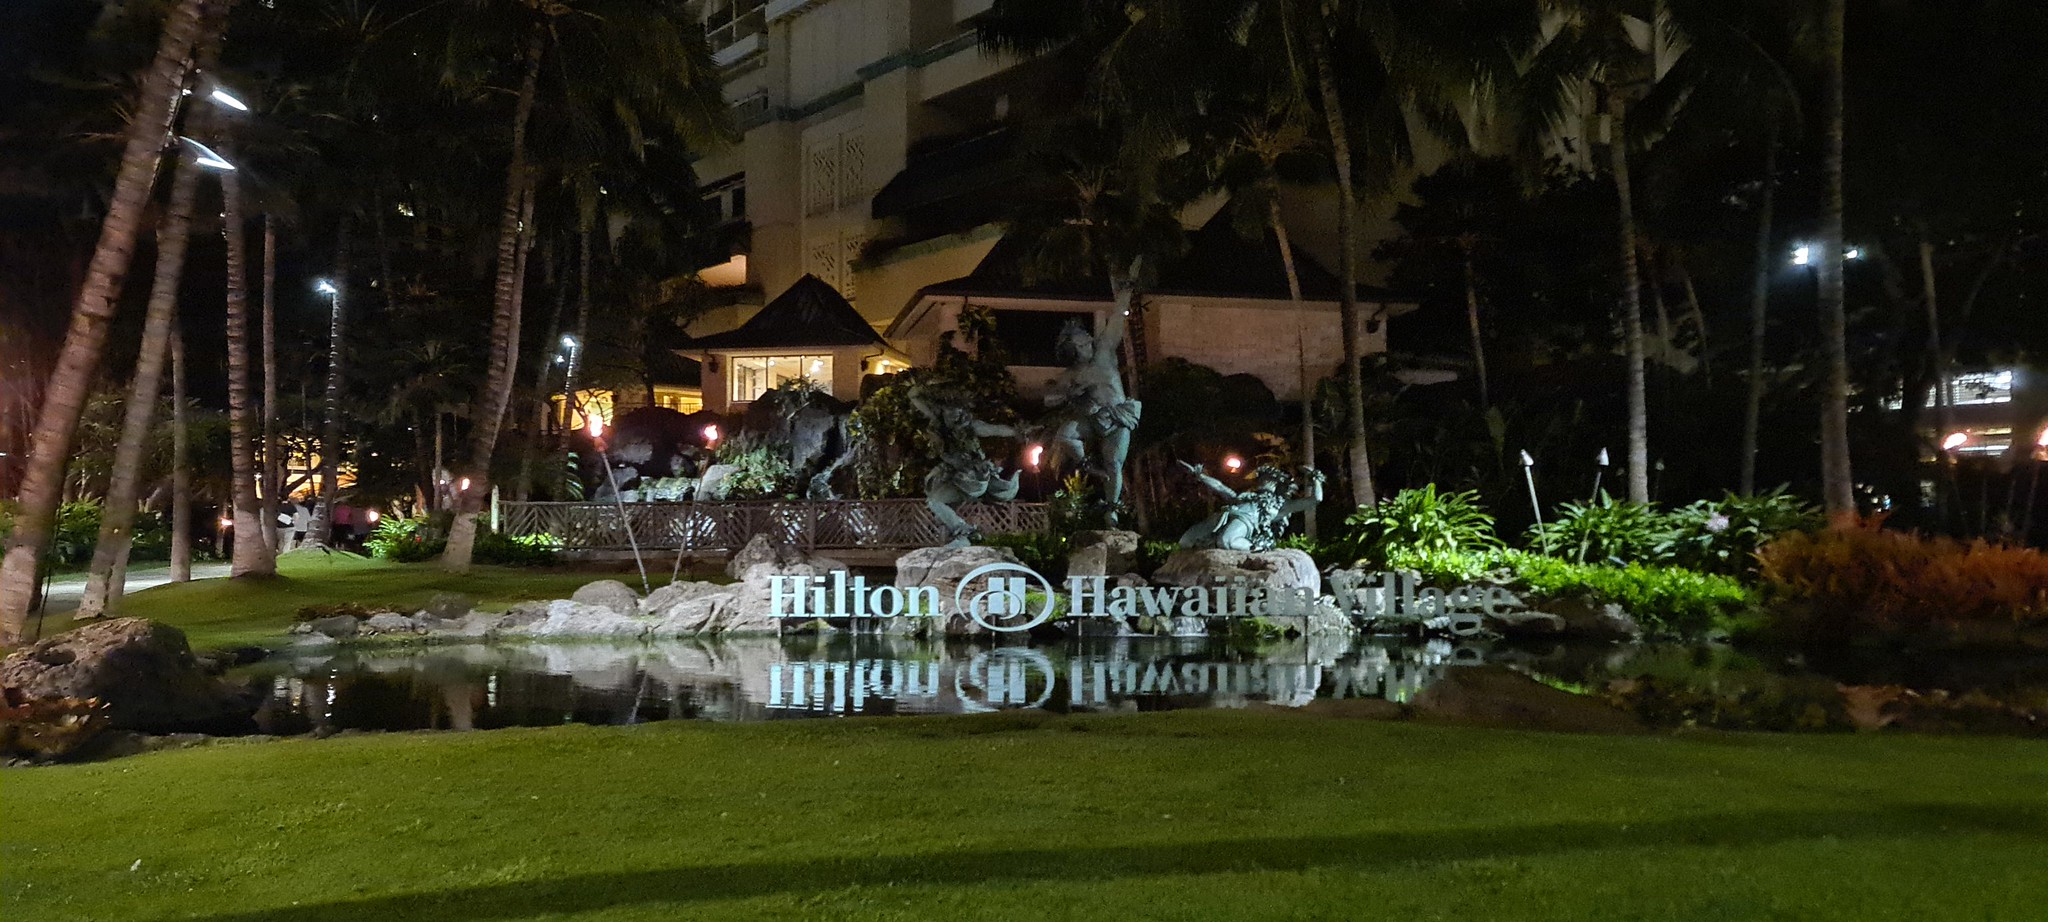 The Hilton Hawaiian Village resort in Honolulu